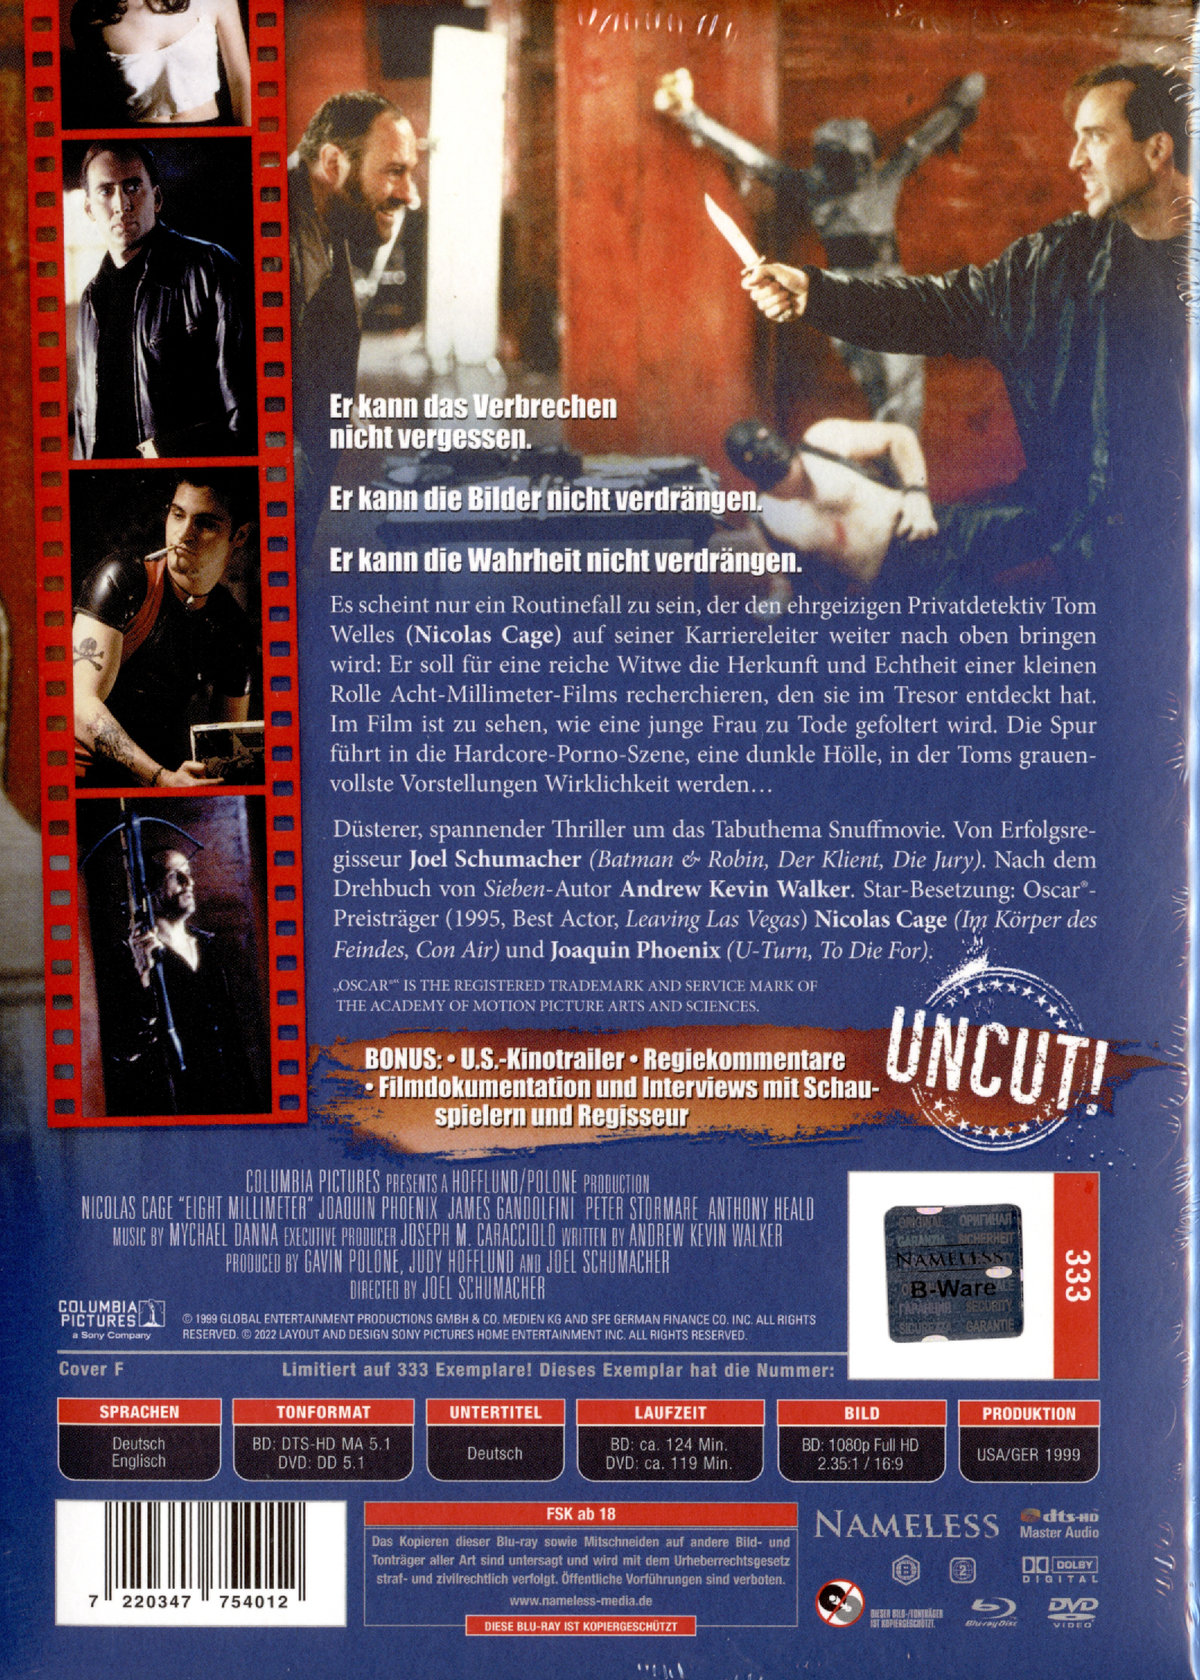 8MM - Acht Millimeter - Uncut Mediabook Edition (DVD+blu-ray) (F)